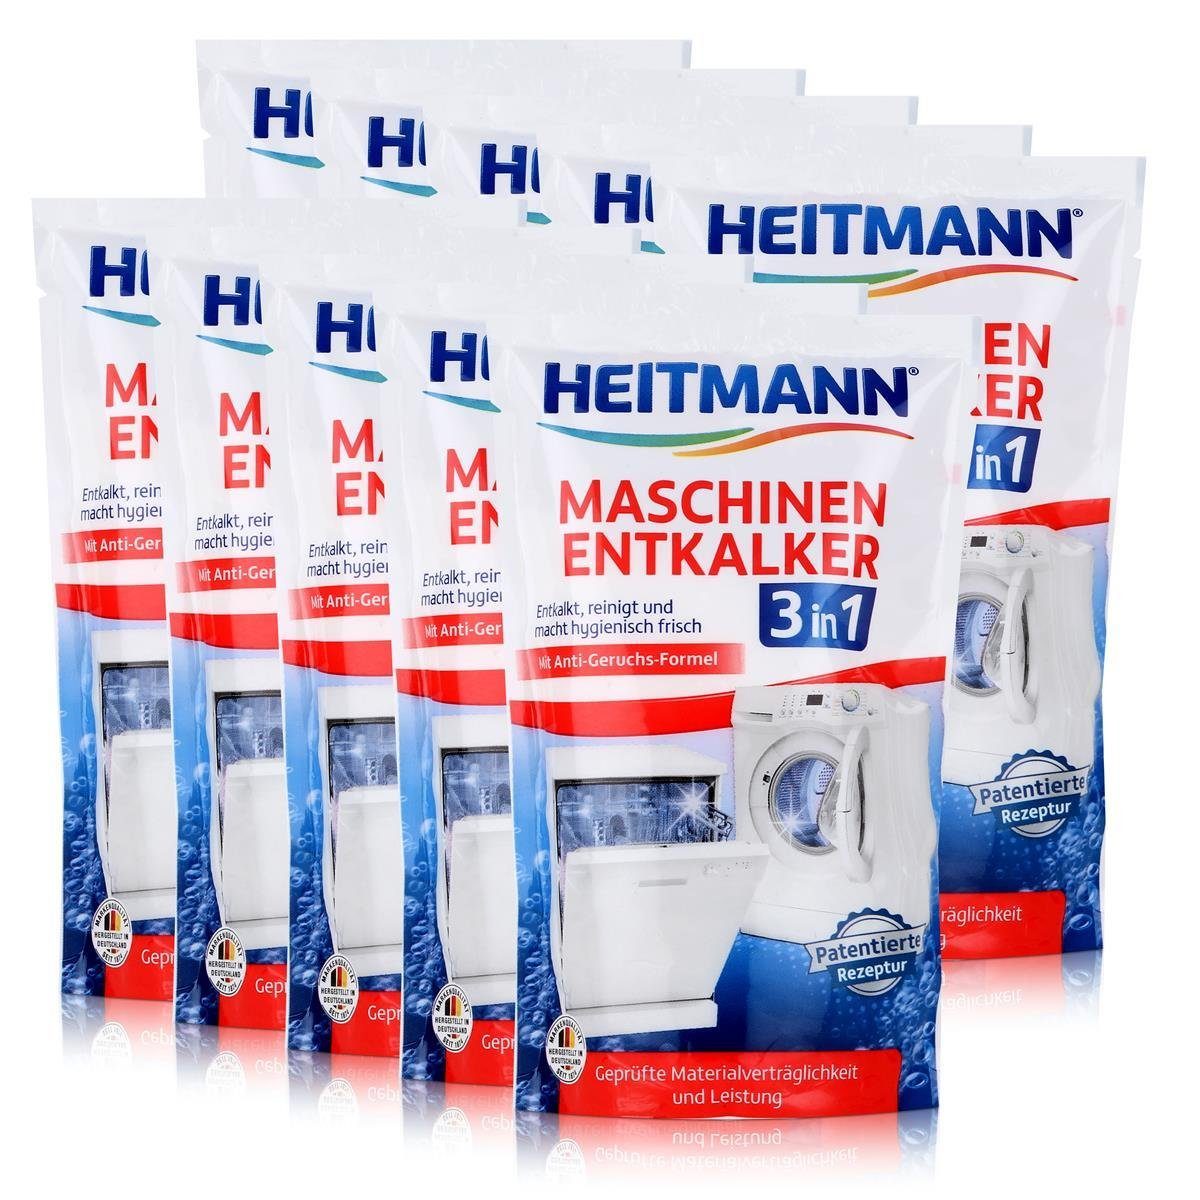 HEITMANN Heitmann Maschinen Entkalker -Waschmaschinen und (Spezialwaschmittel 175g Geschirrspüler